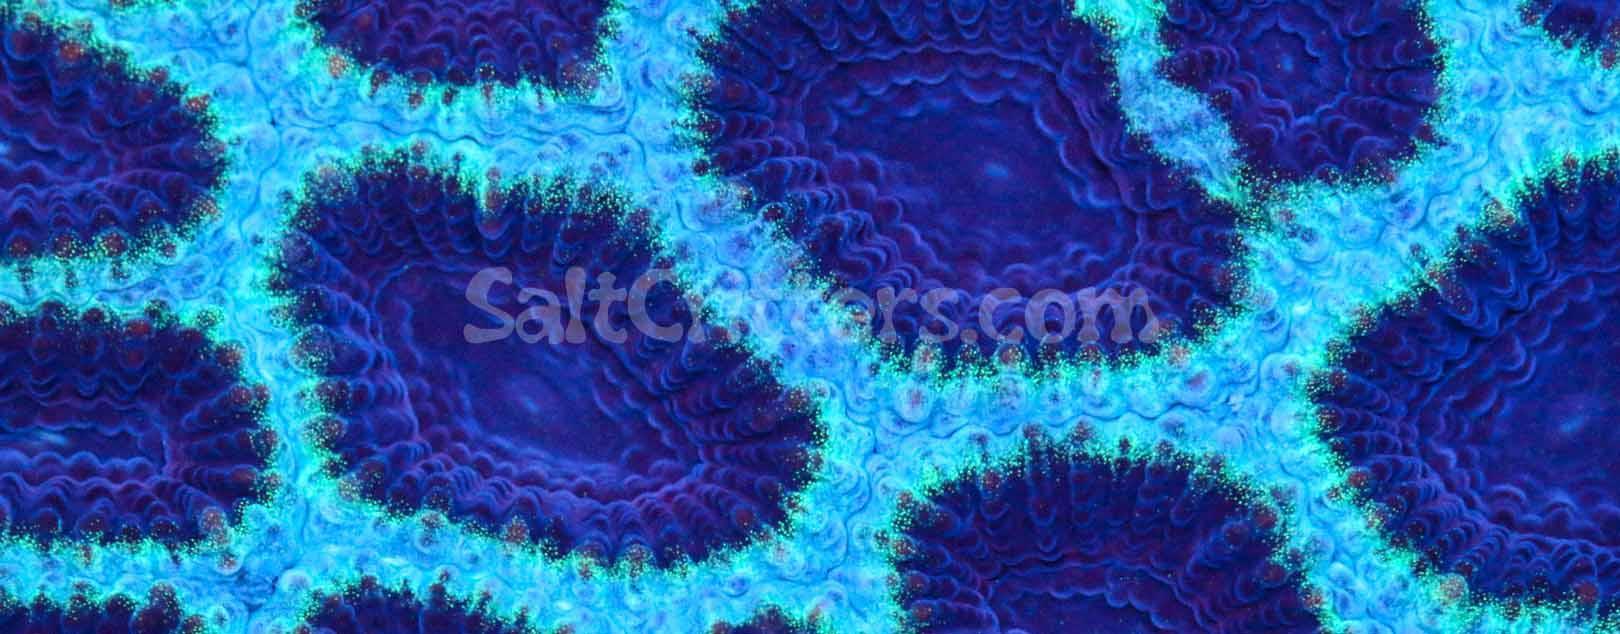 Favia / Favites / Brain / Platygyra Coral